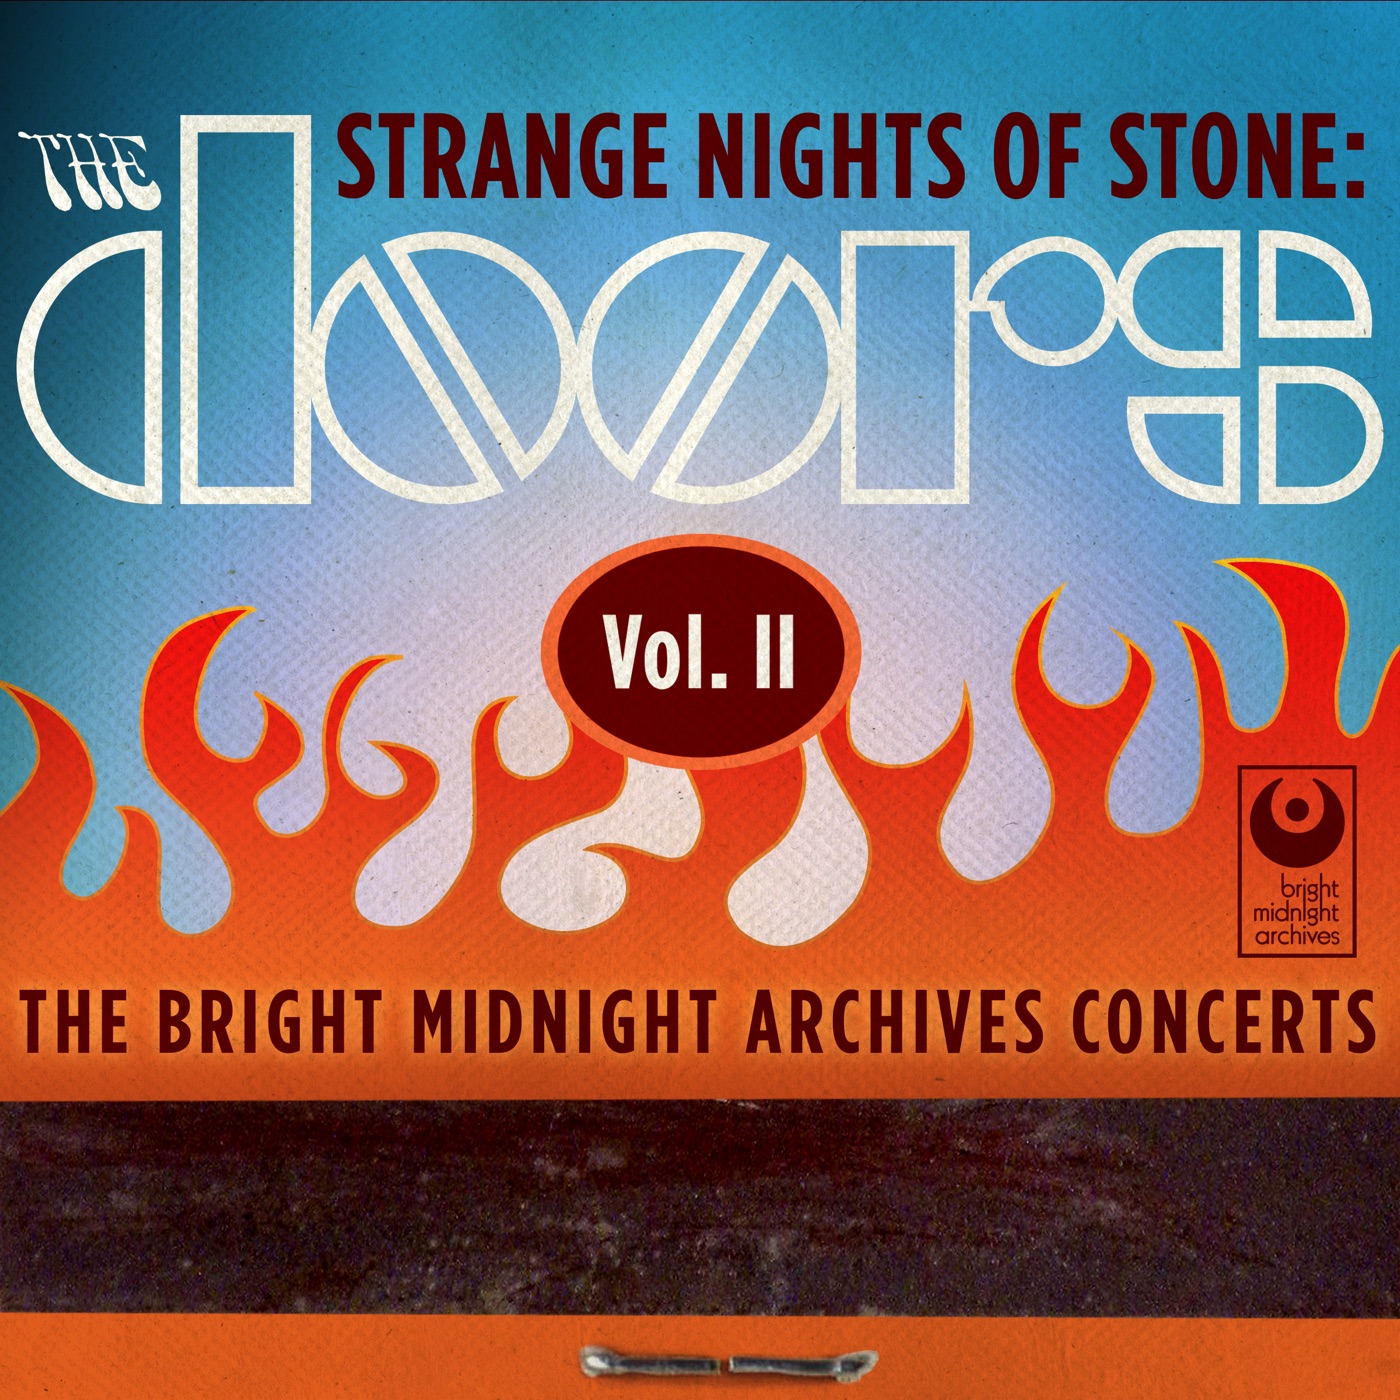 Strange Nights of Stone by The Doors